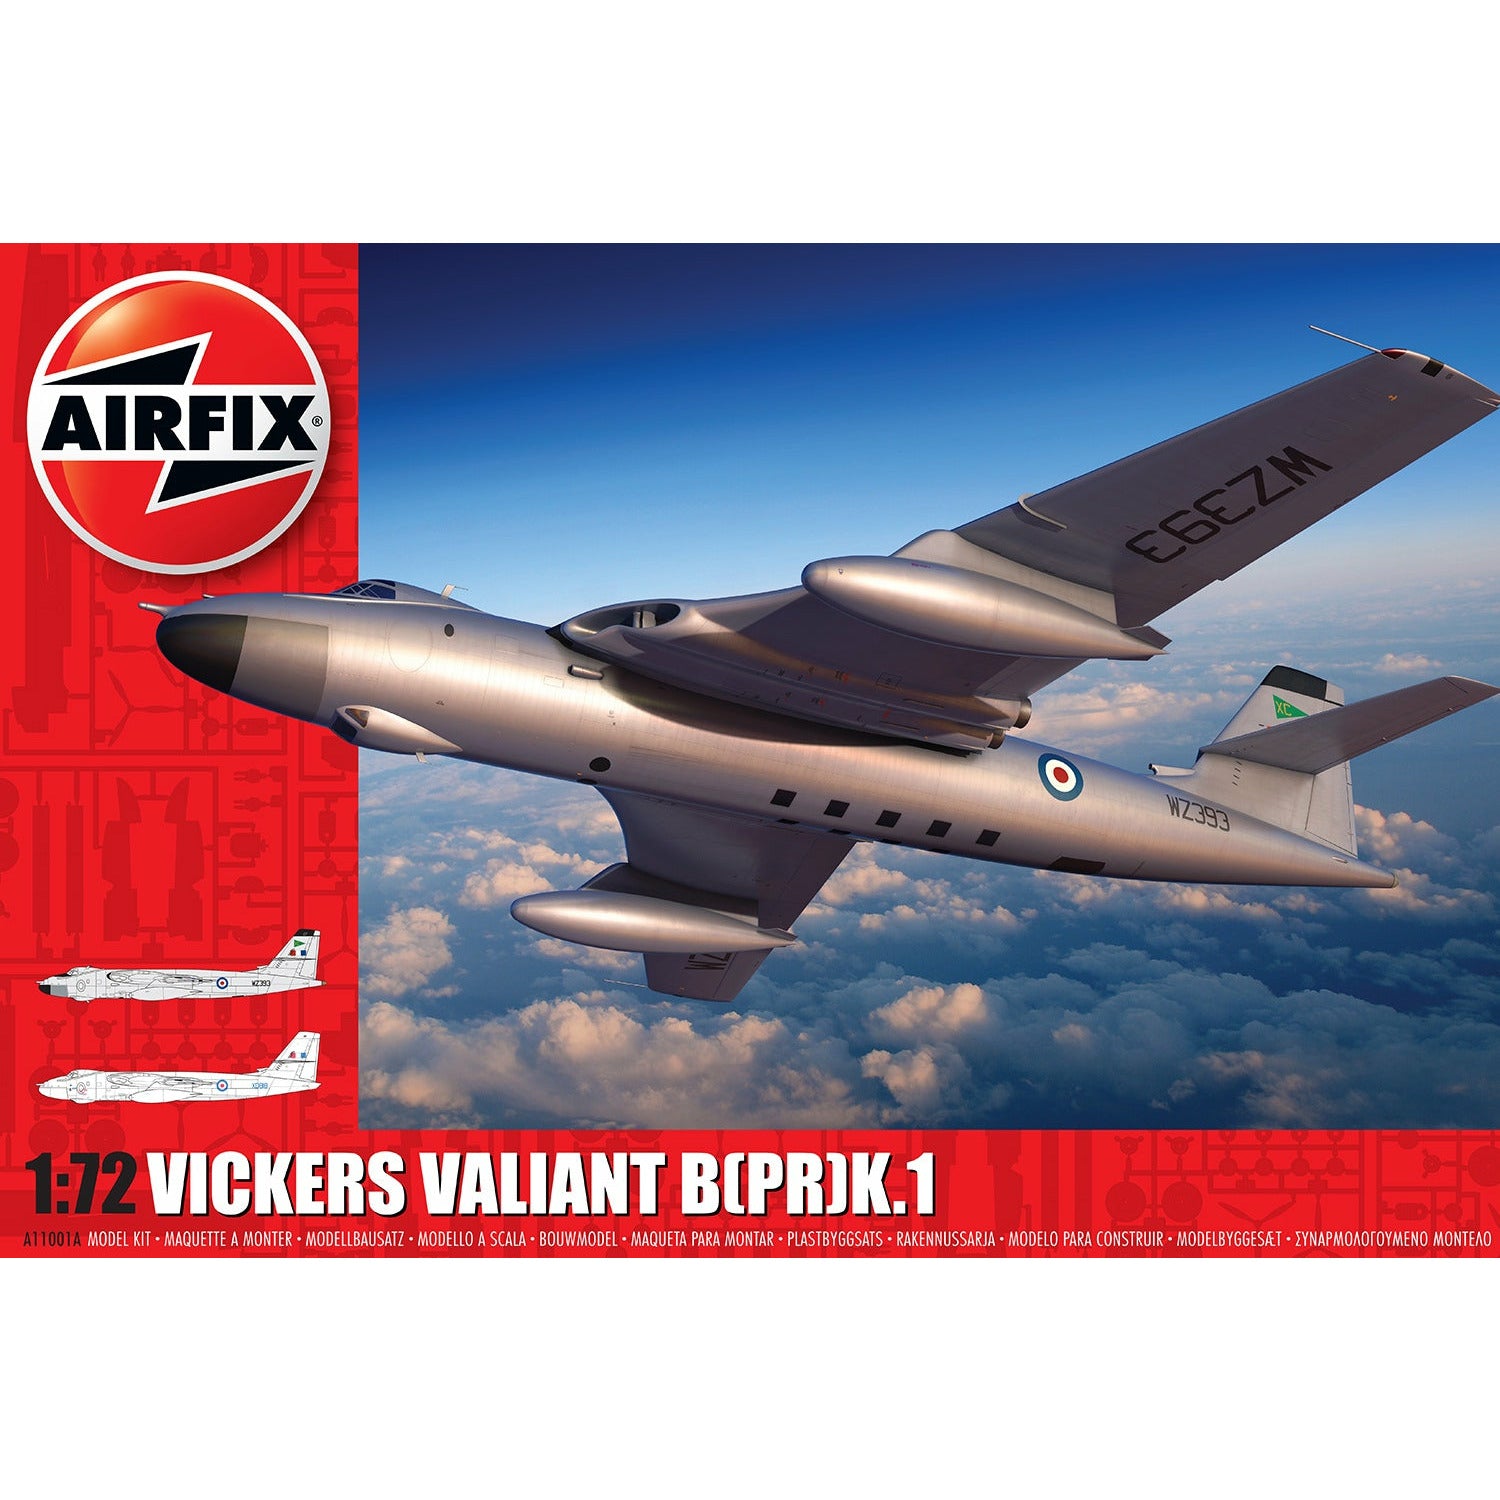 Vickers Valiant B(PR)K.1 1/72 #11001A by Airfix